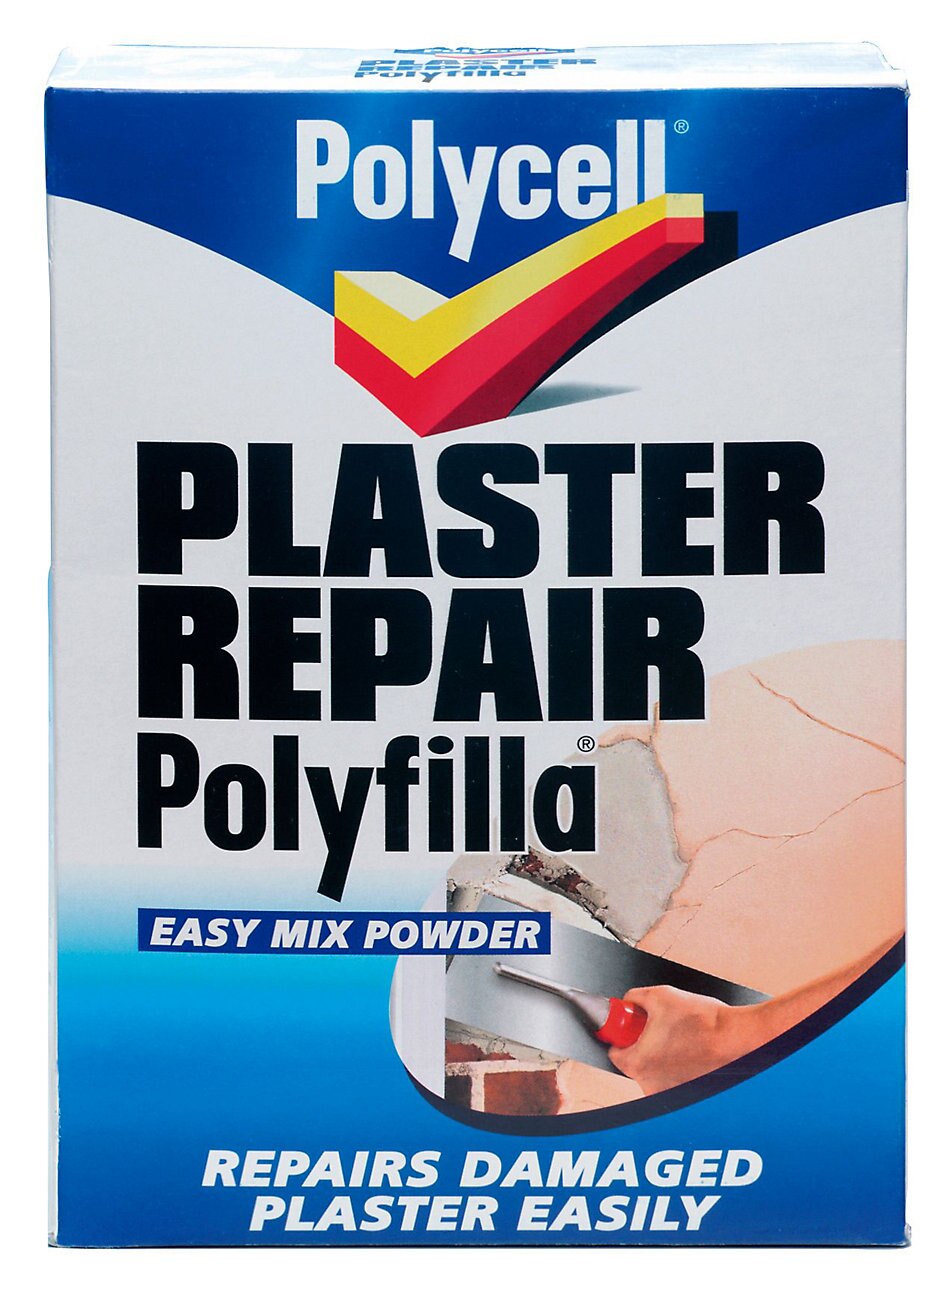 POLYCELL PLASTER REPAIR POLYFILLA EASY MIX POWDER 1.8KG